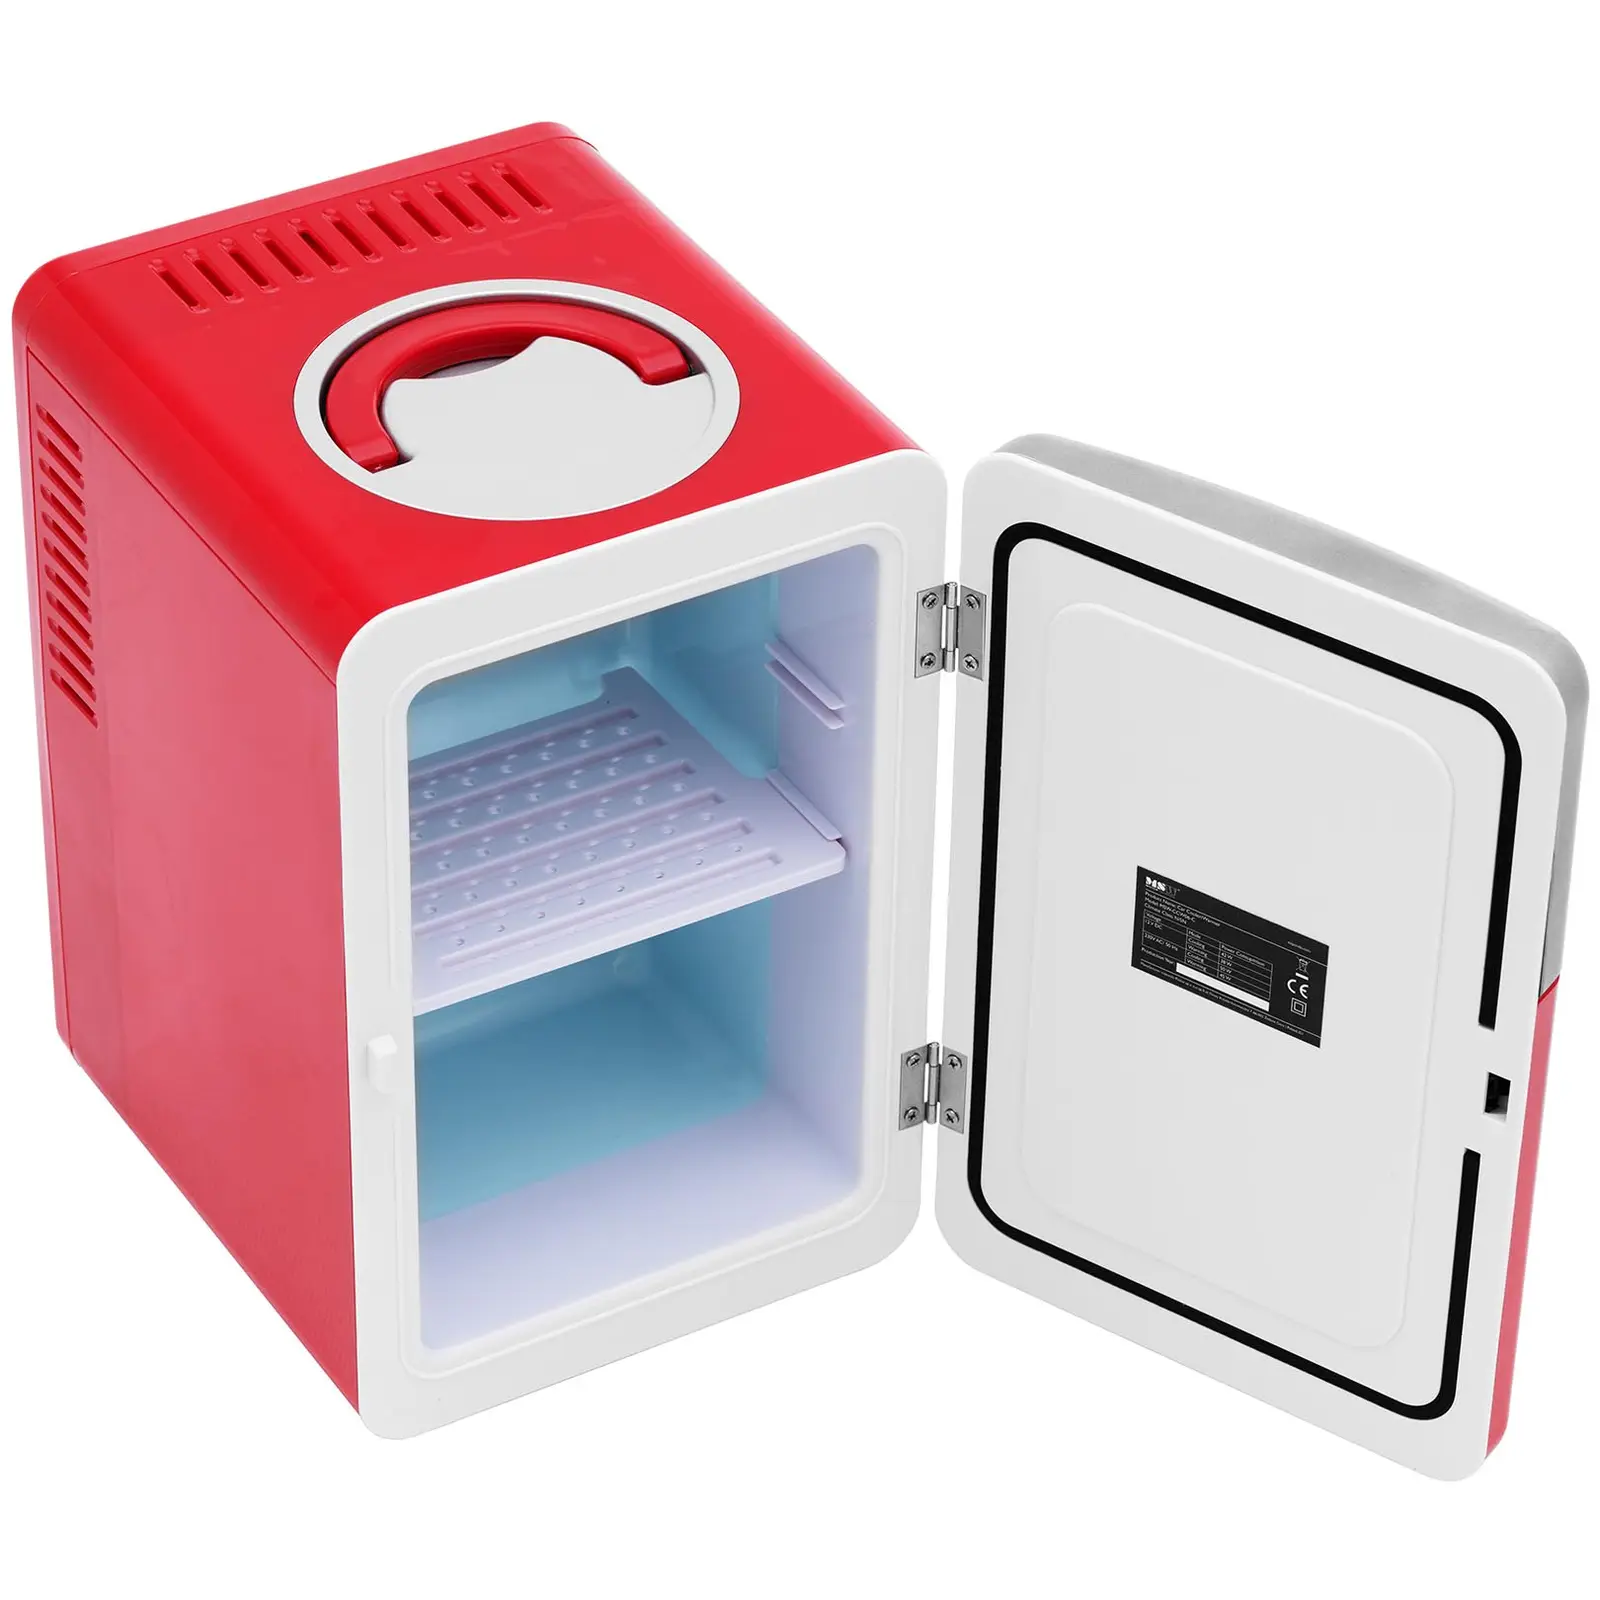 Mini-Kühlschrank 12 V / 230 V - 2-in-1-Gerät mit Warmhaltefunktion - 6 L -  Rot/silbern